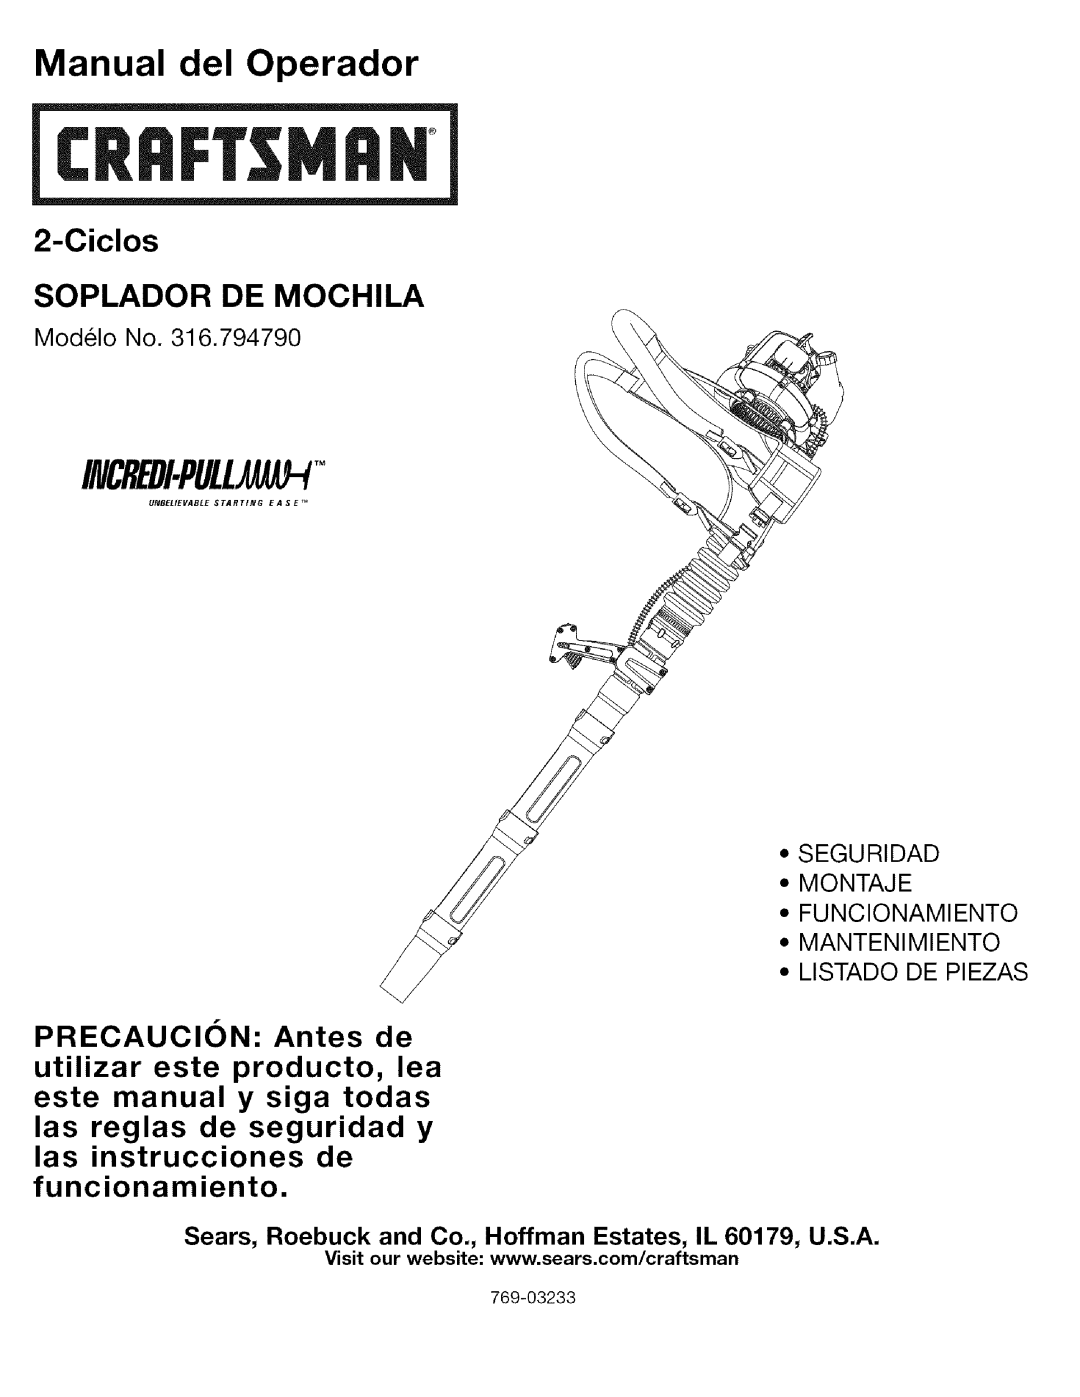 Craftsman 316.79479 Incredi.Pullt__, Manual del Operador, Ciclos SOPLADOR DE MOCHILA, PRECAUCION: Antes de, 769-03233 